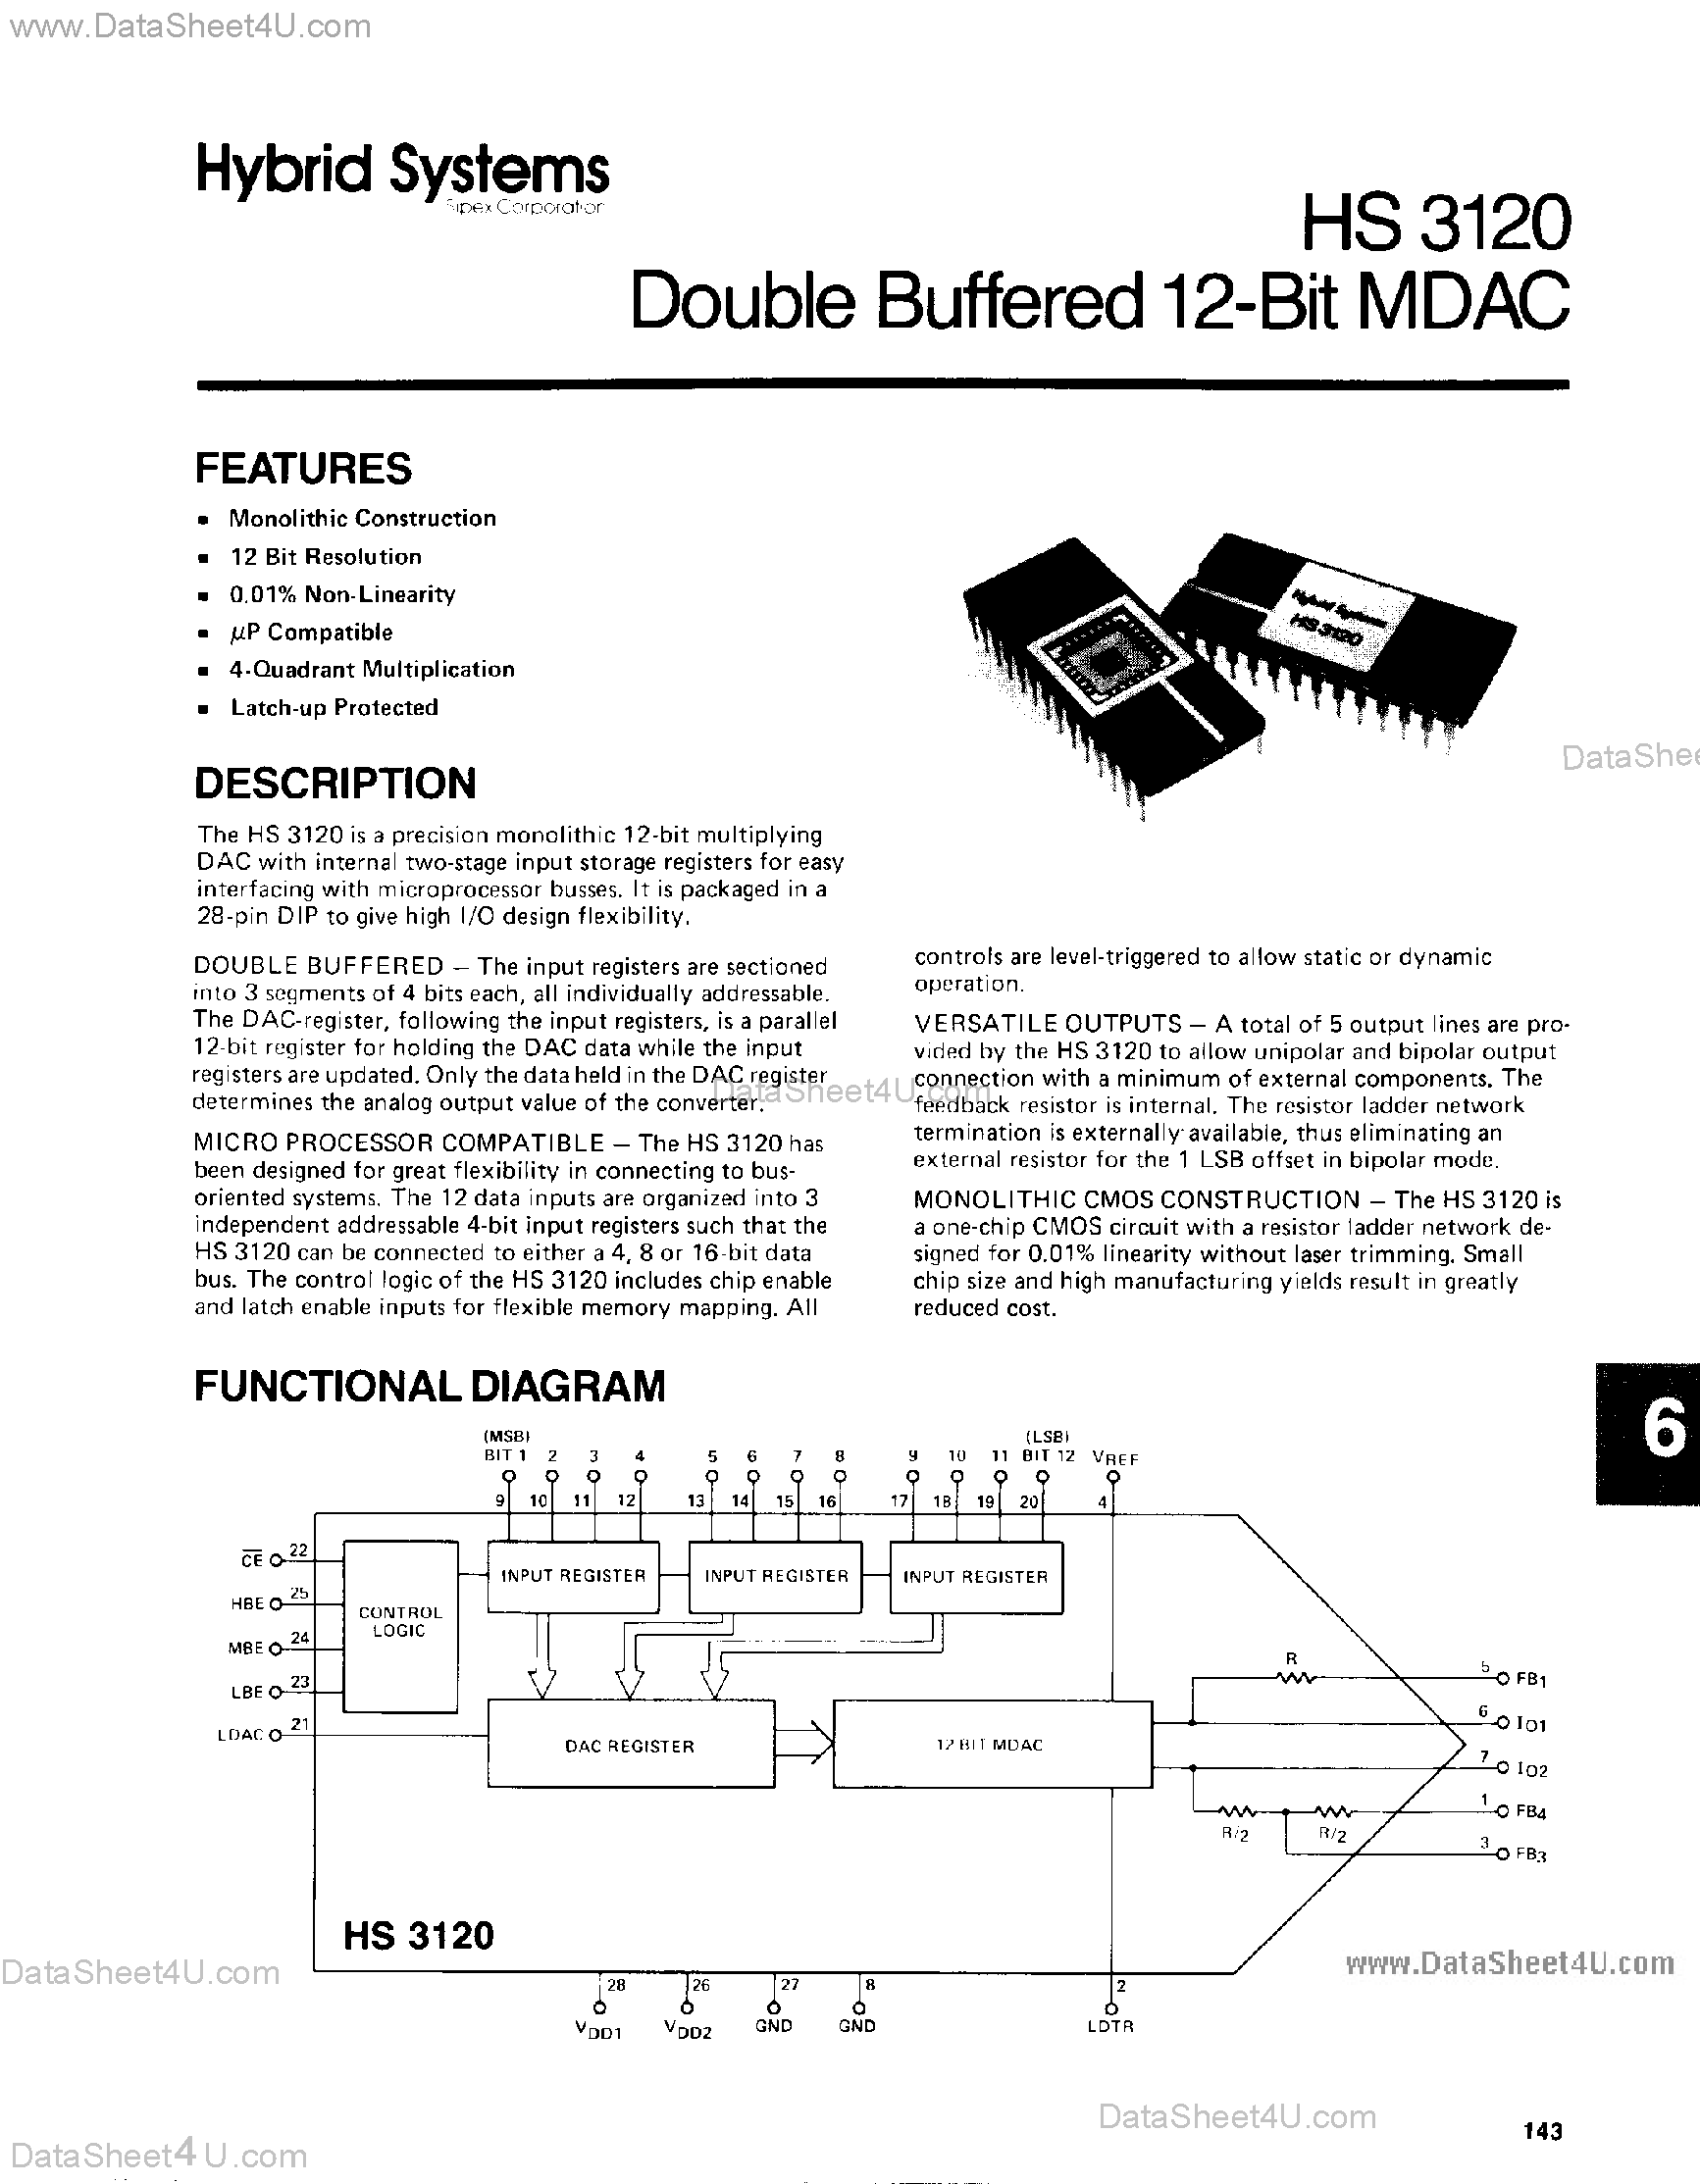 Даташит HS3120 - Double Buffered 12-Bit MDAC страница 1